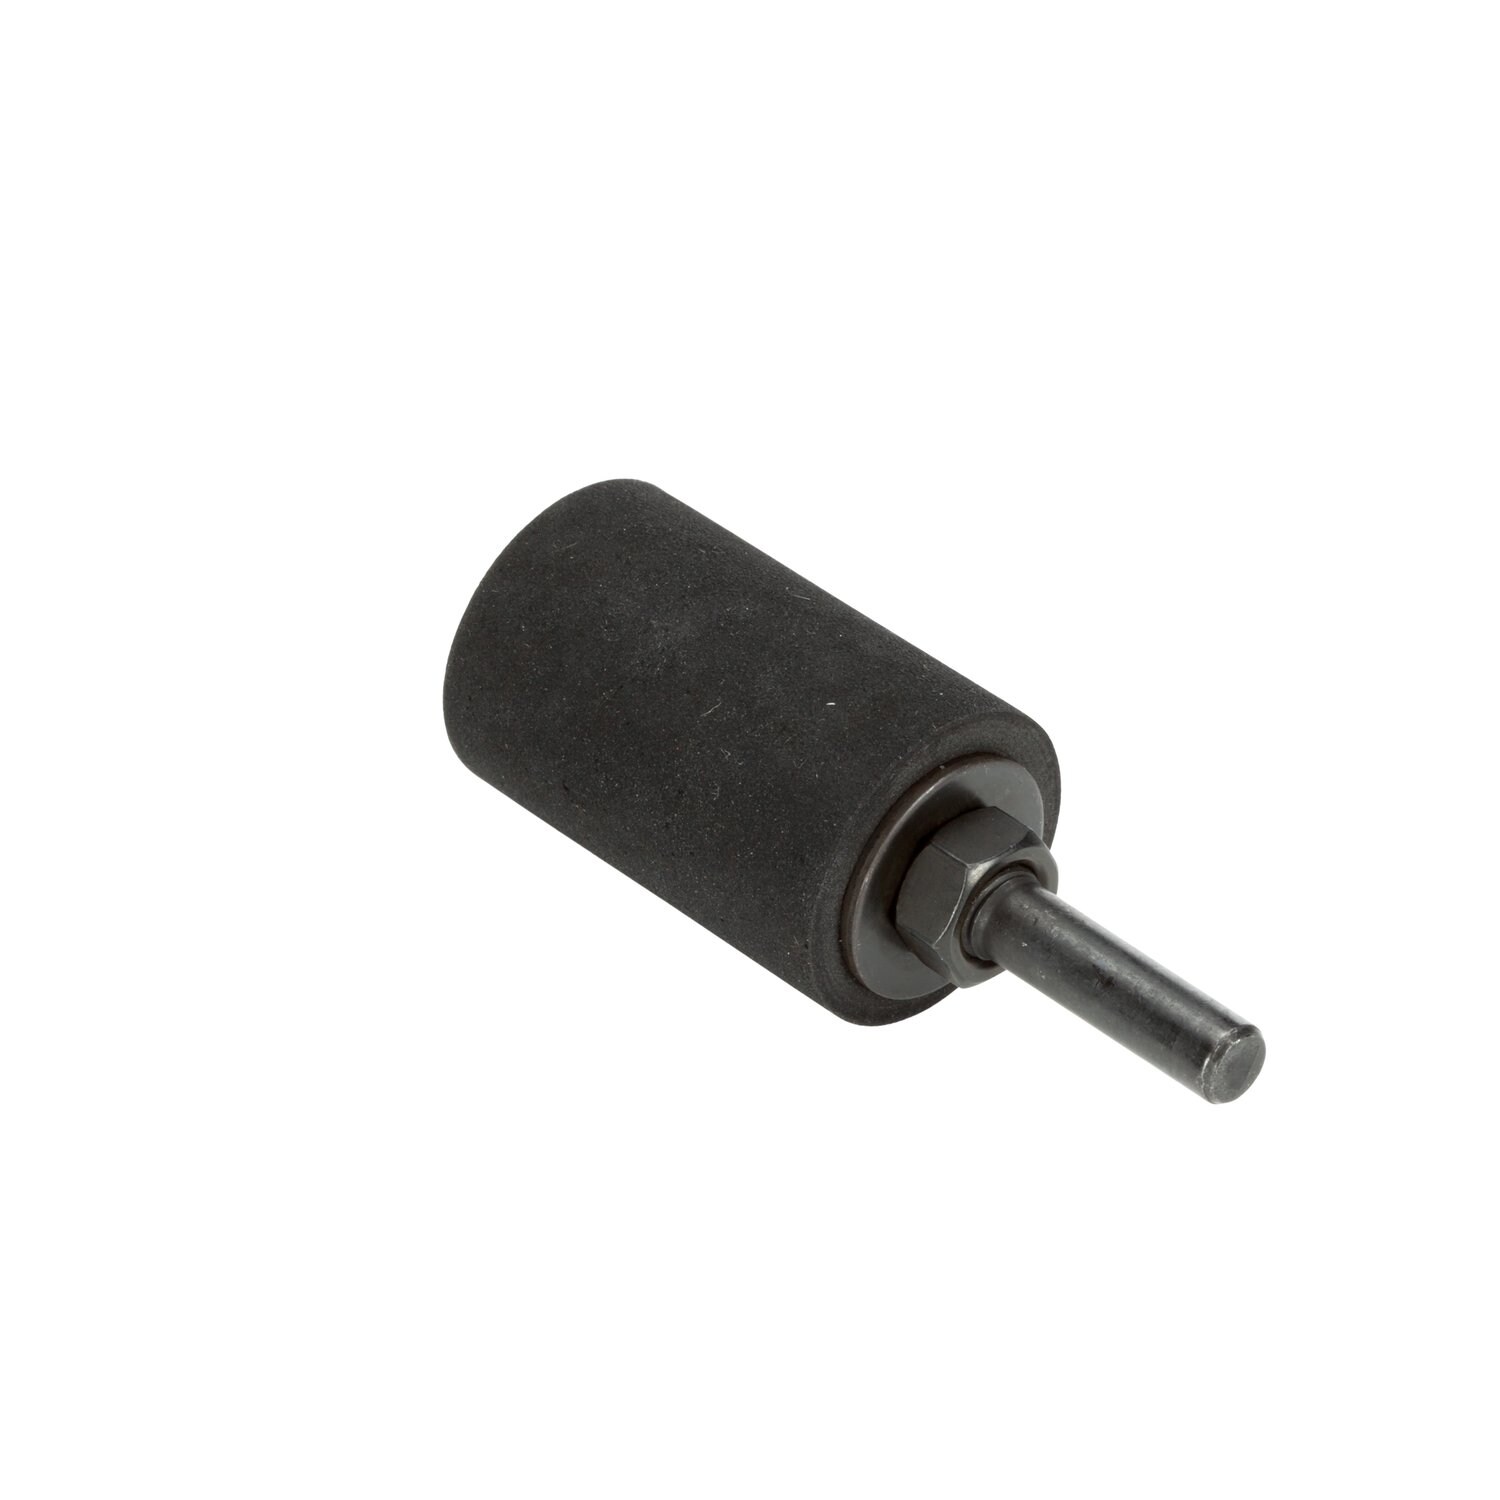 7010368171 - Standard Abrasives Rubber Sanding Drum 702562, 1 in x 1-1/2 in x 1/4
in, 10 ea/Case